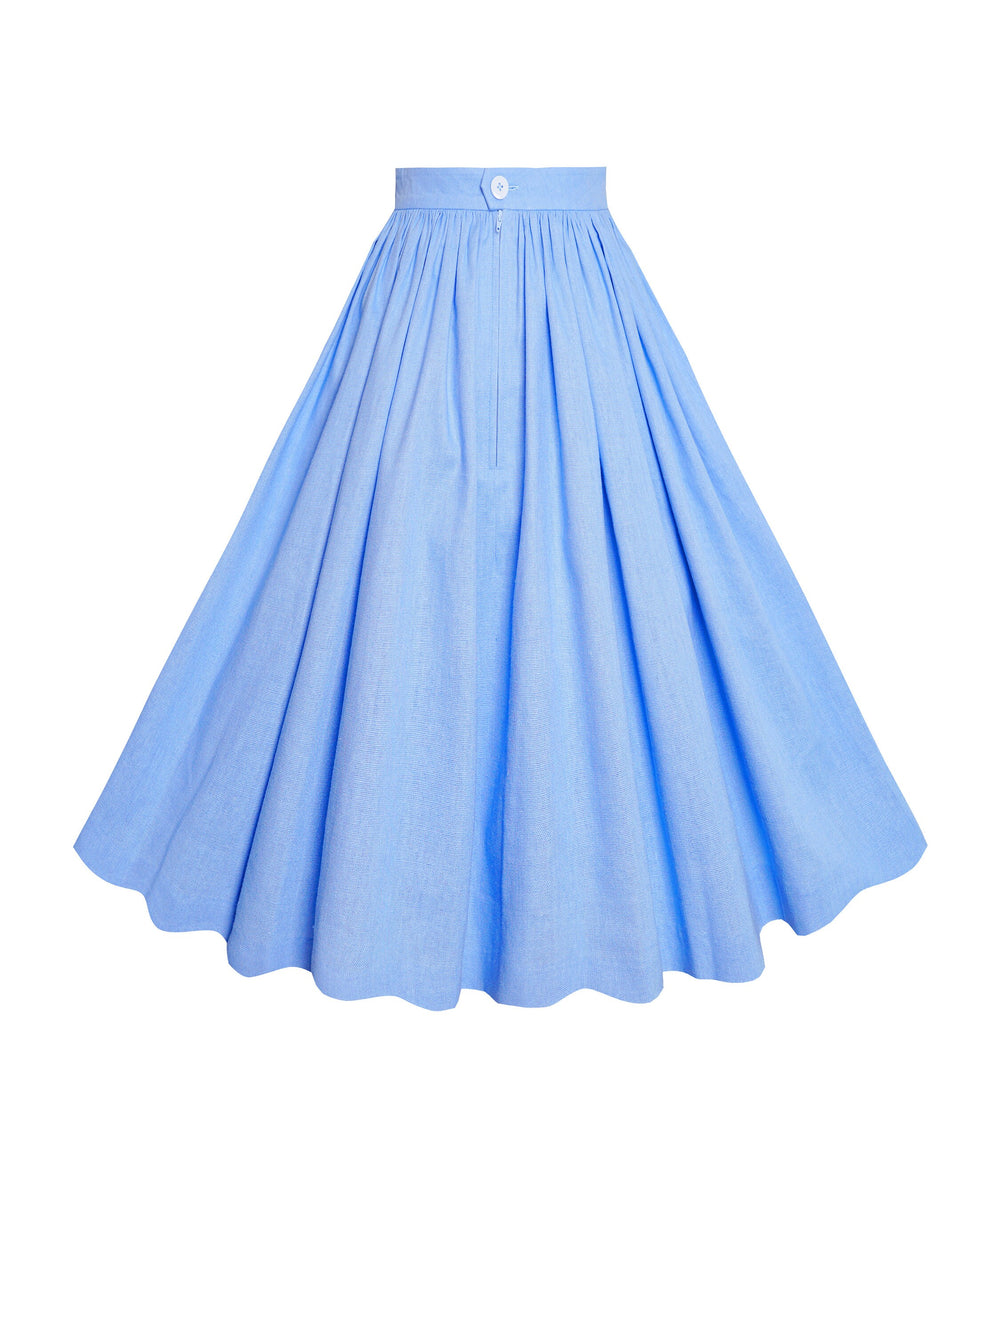 MTO - Lola Skirt in Powder Blue Linen